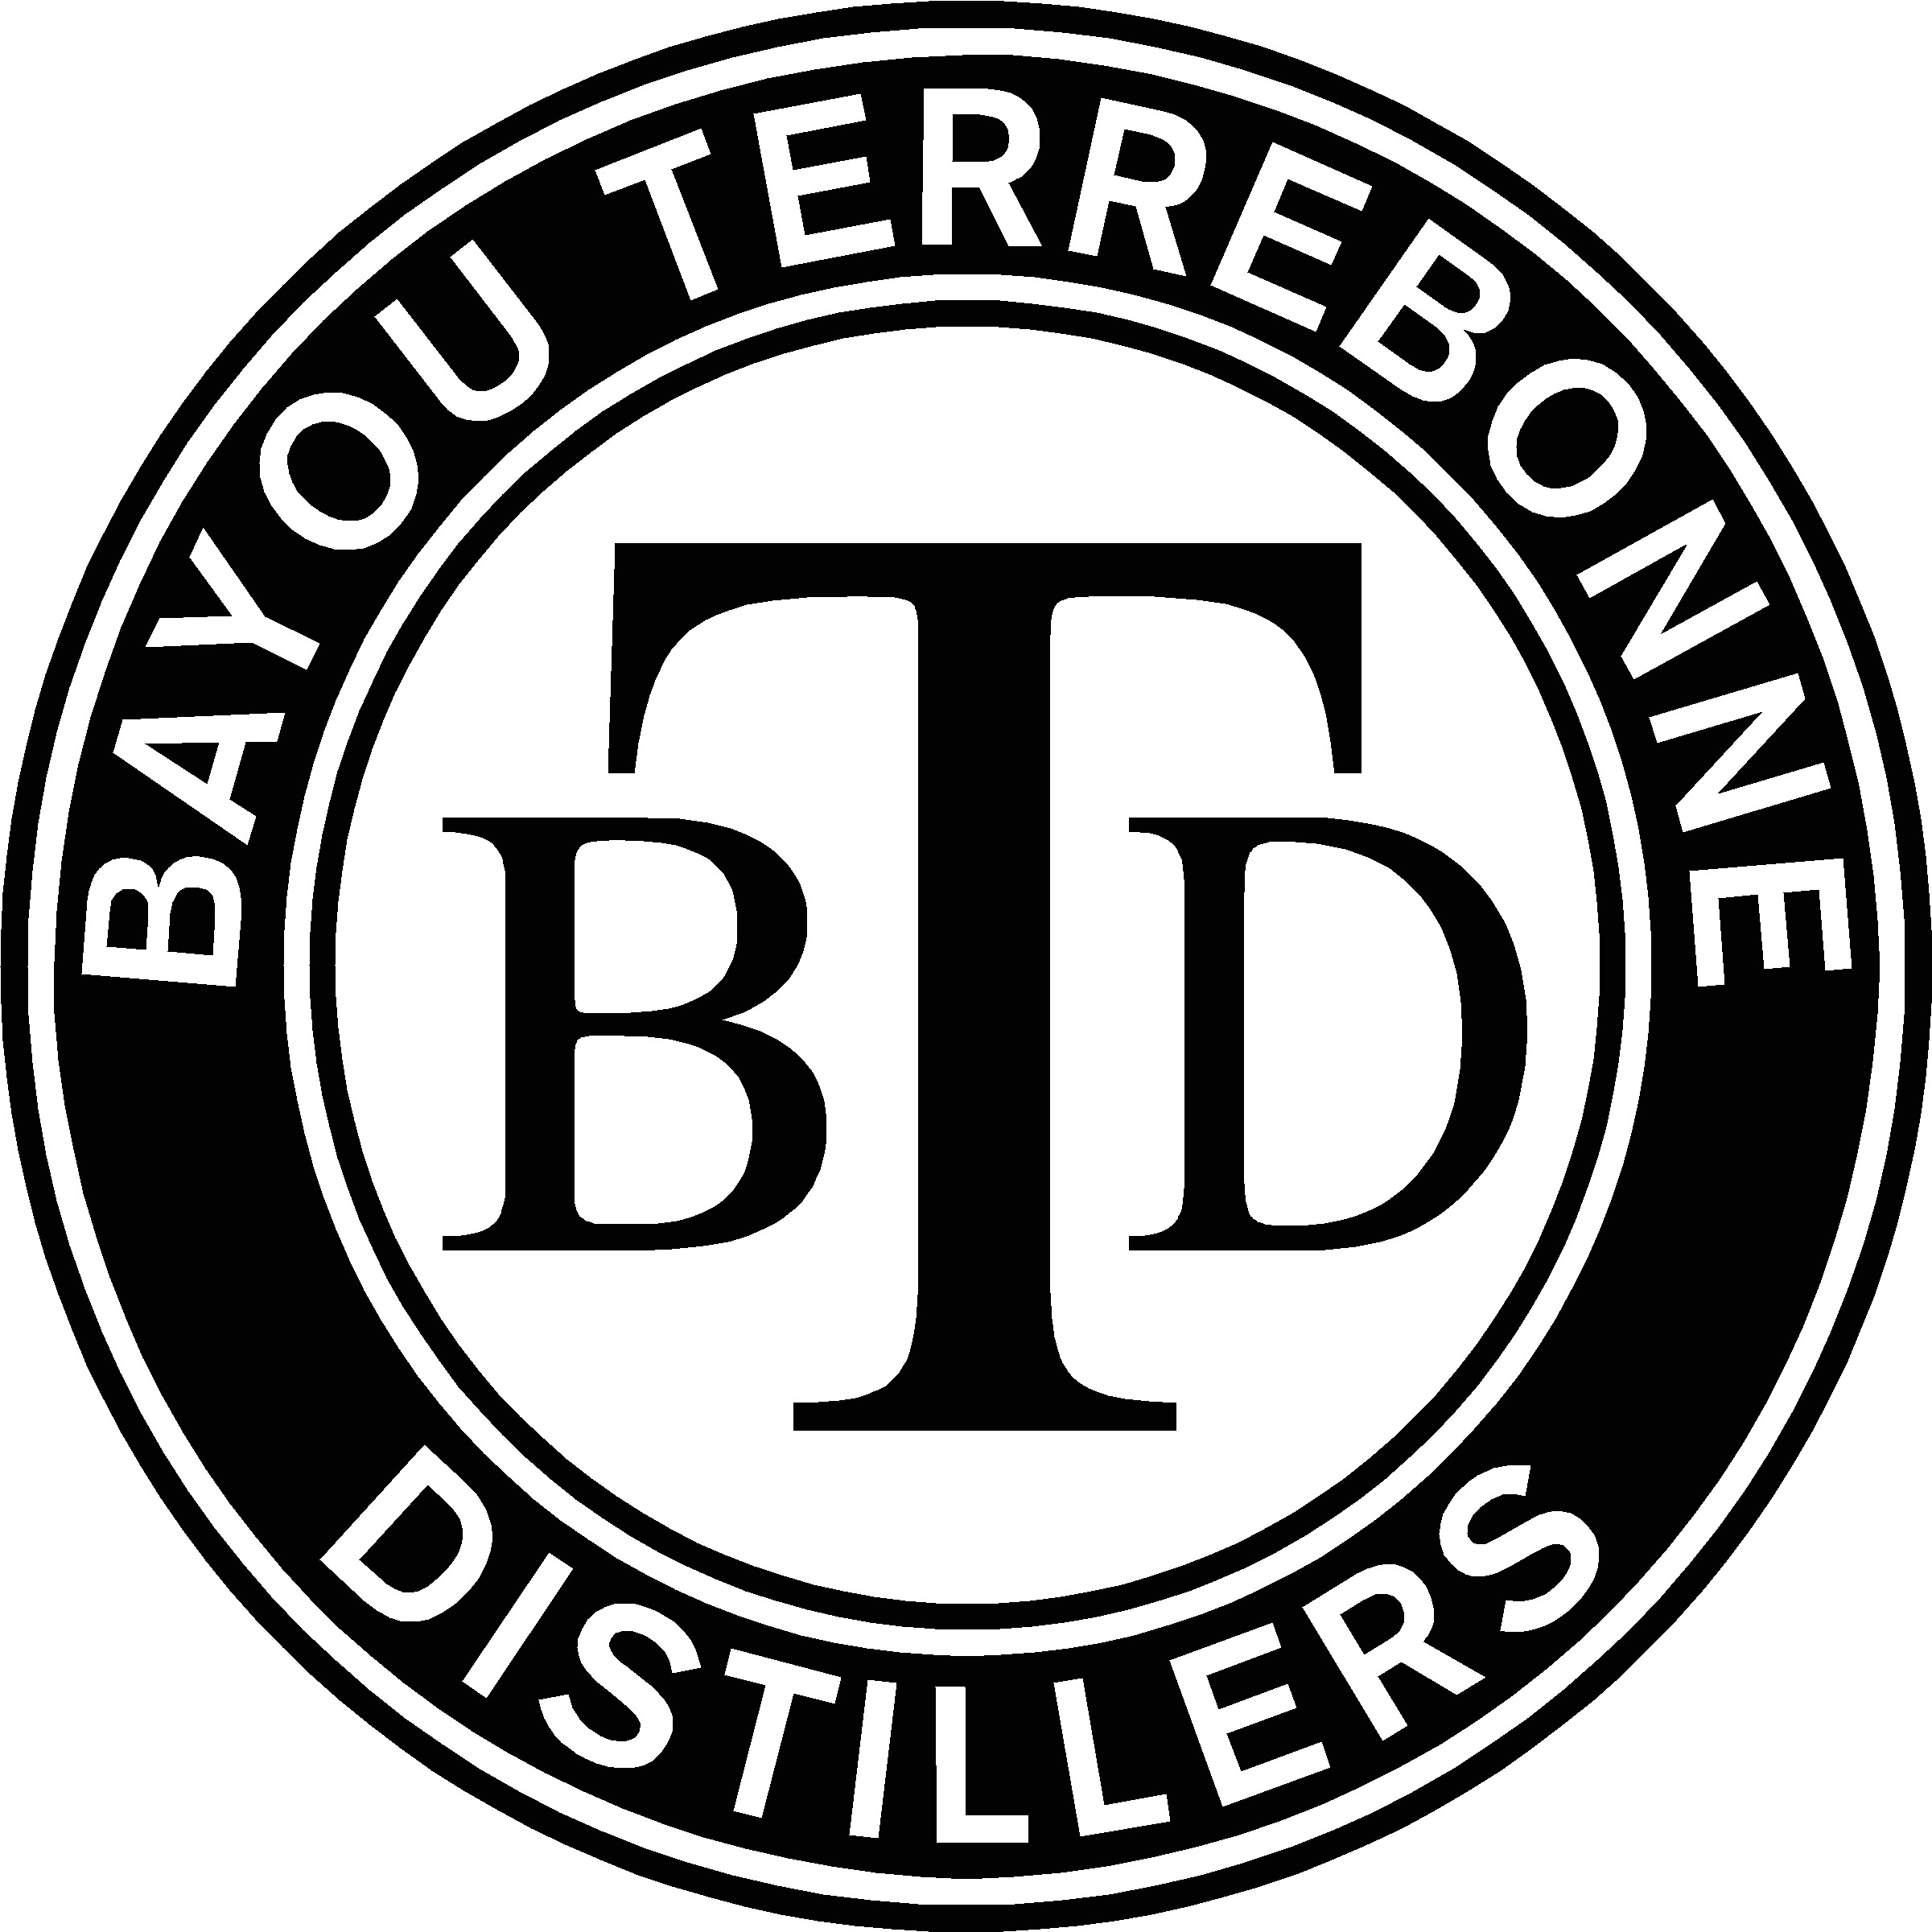 Bayou Terrebonne Distillers